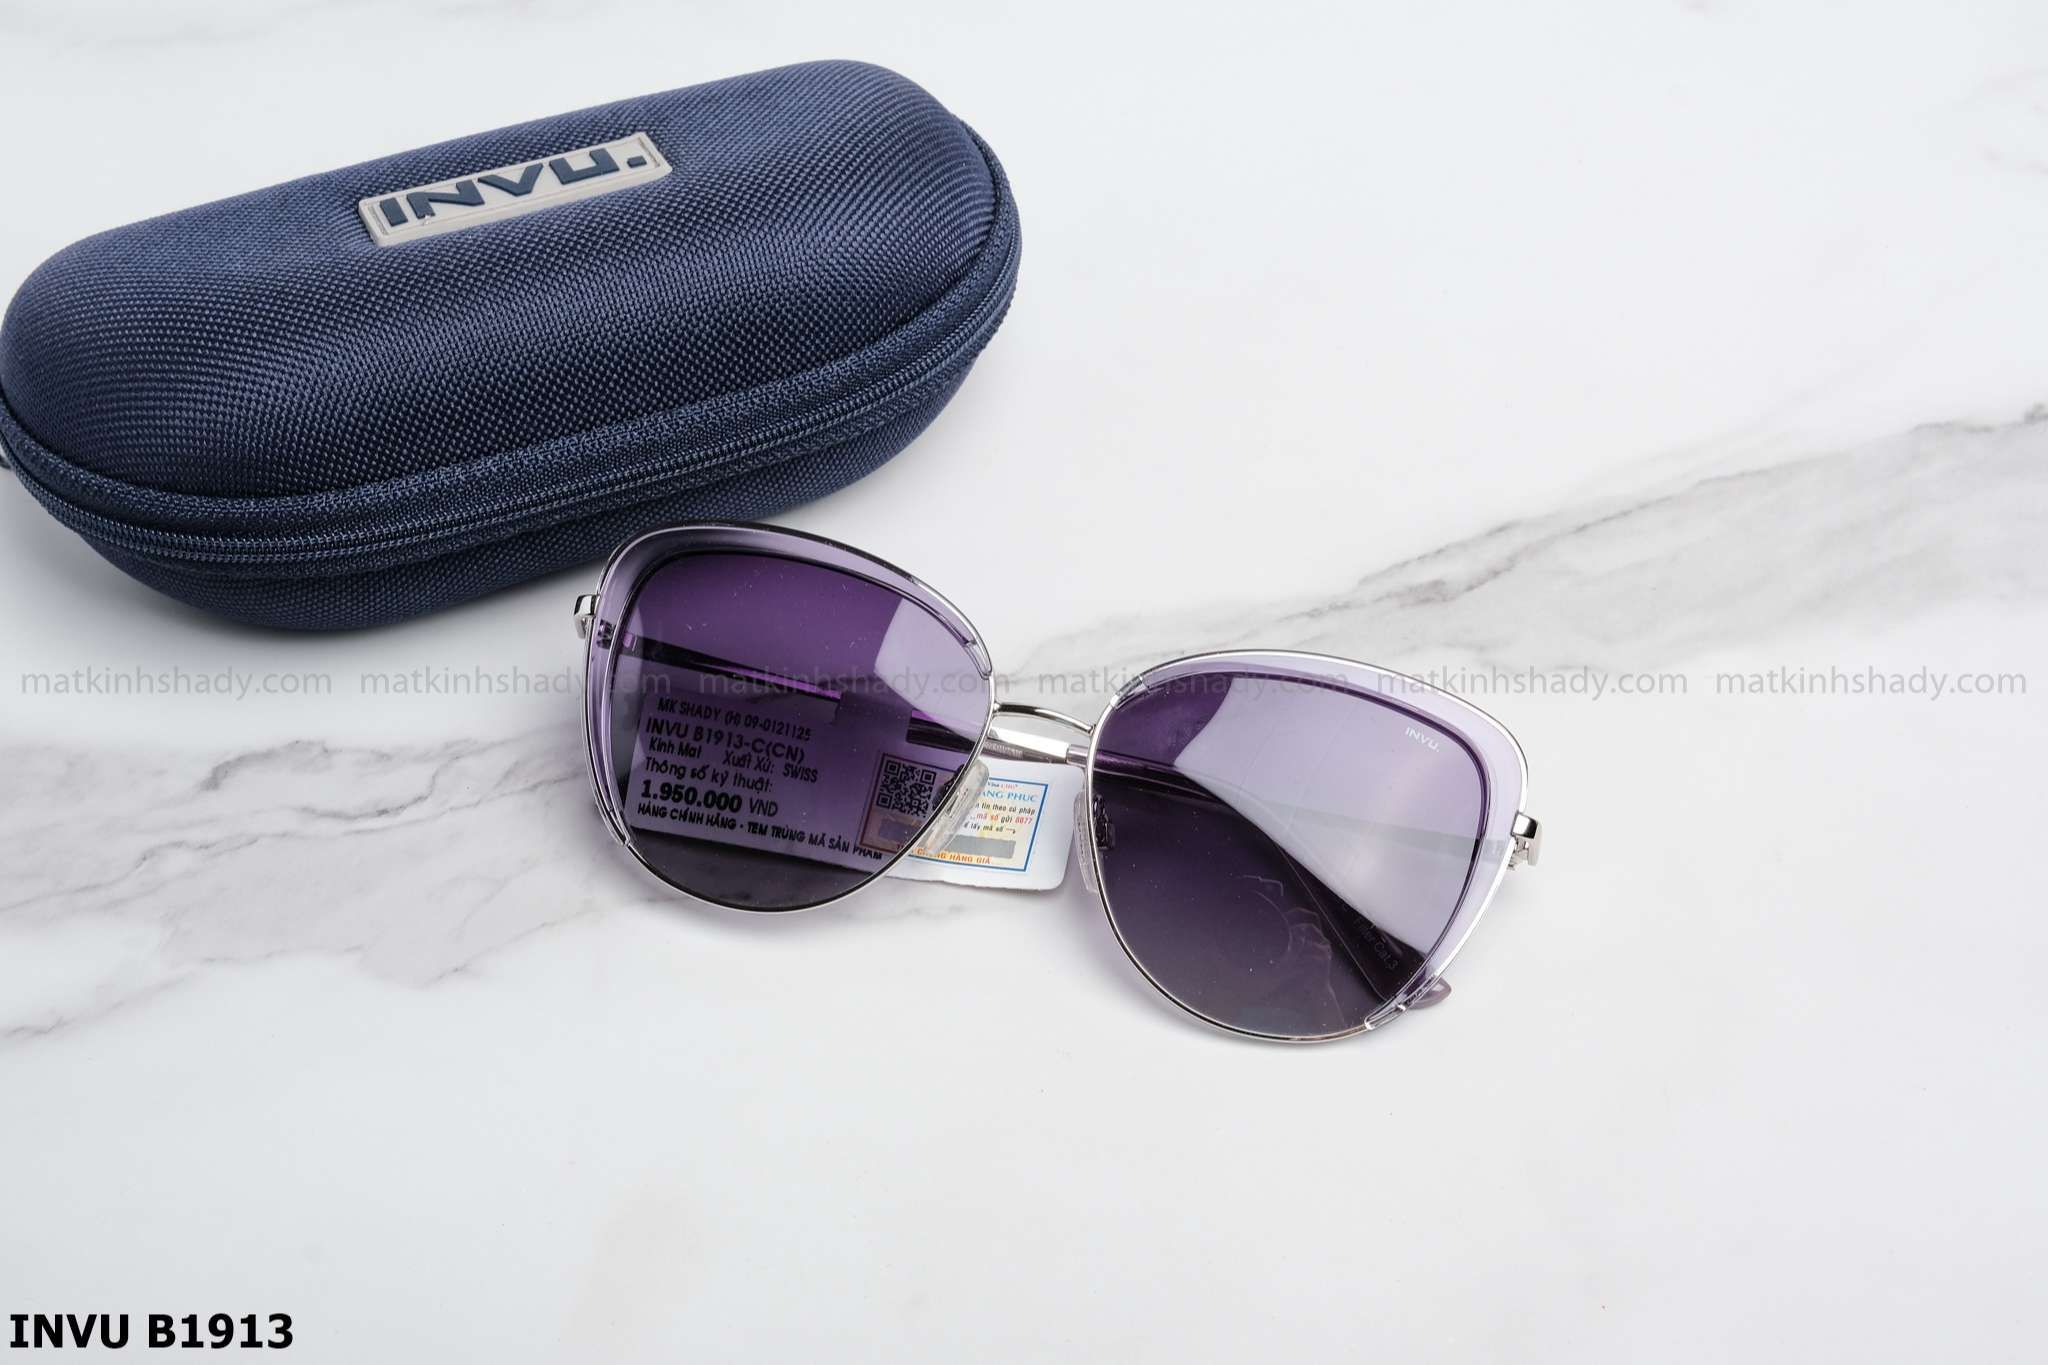  Invu Eyewear - Sunglasses - B1913 